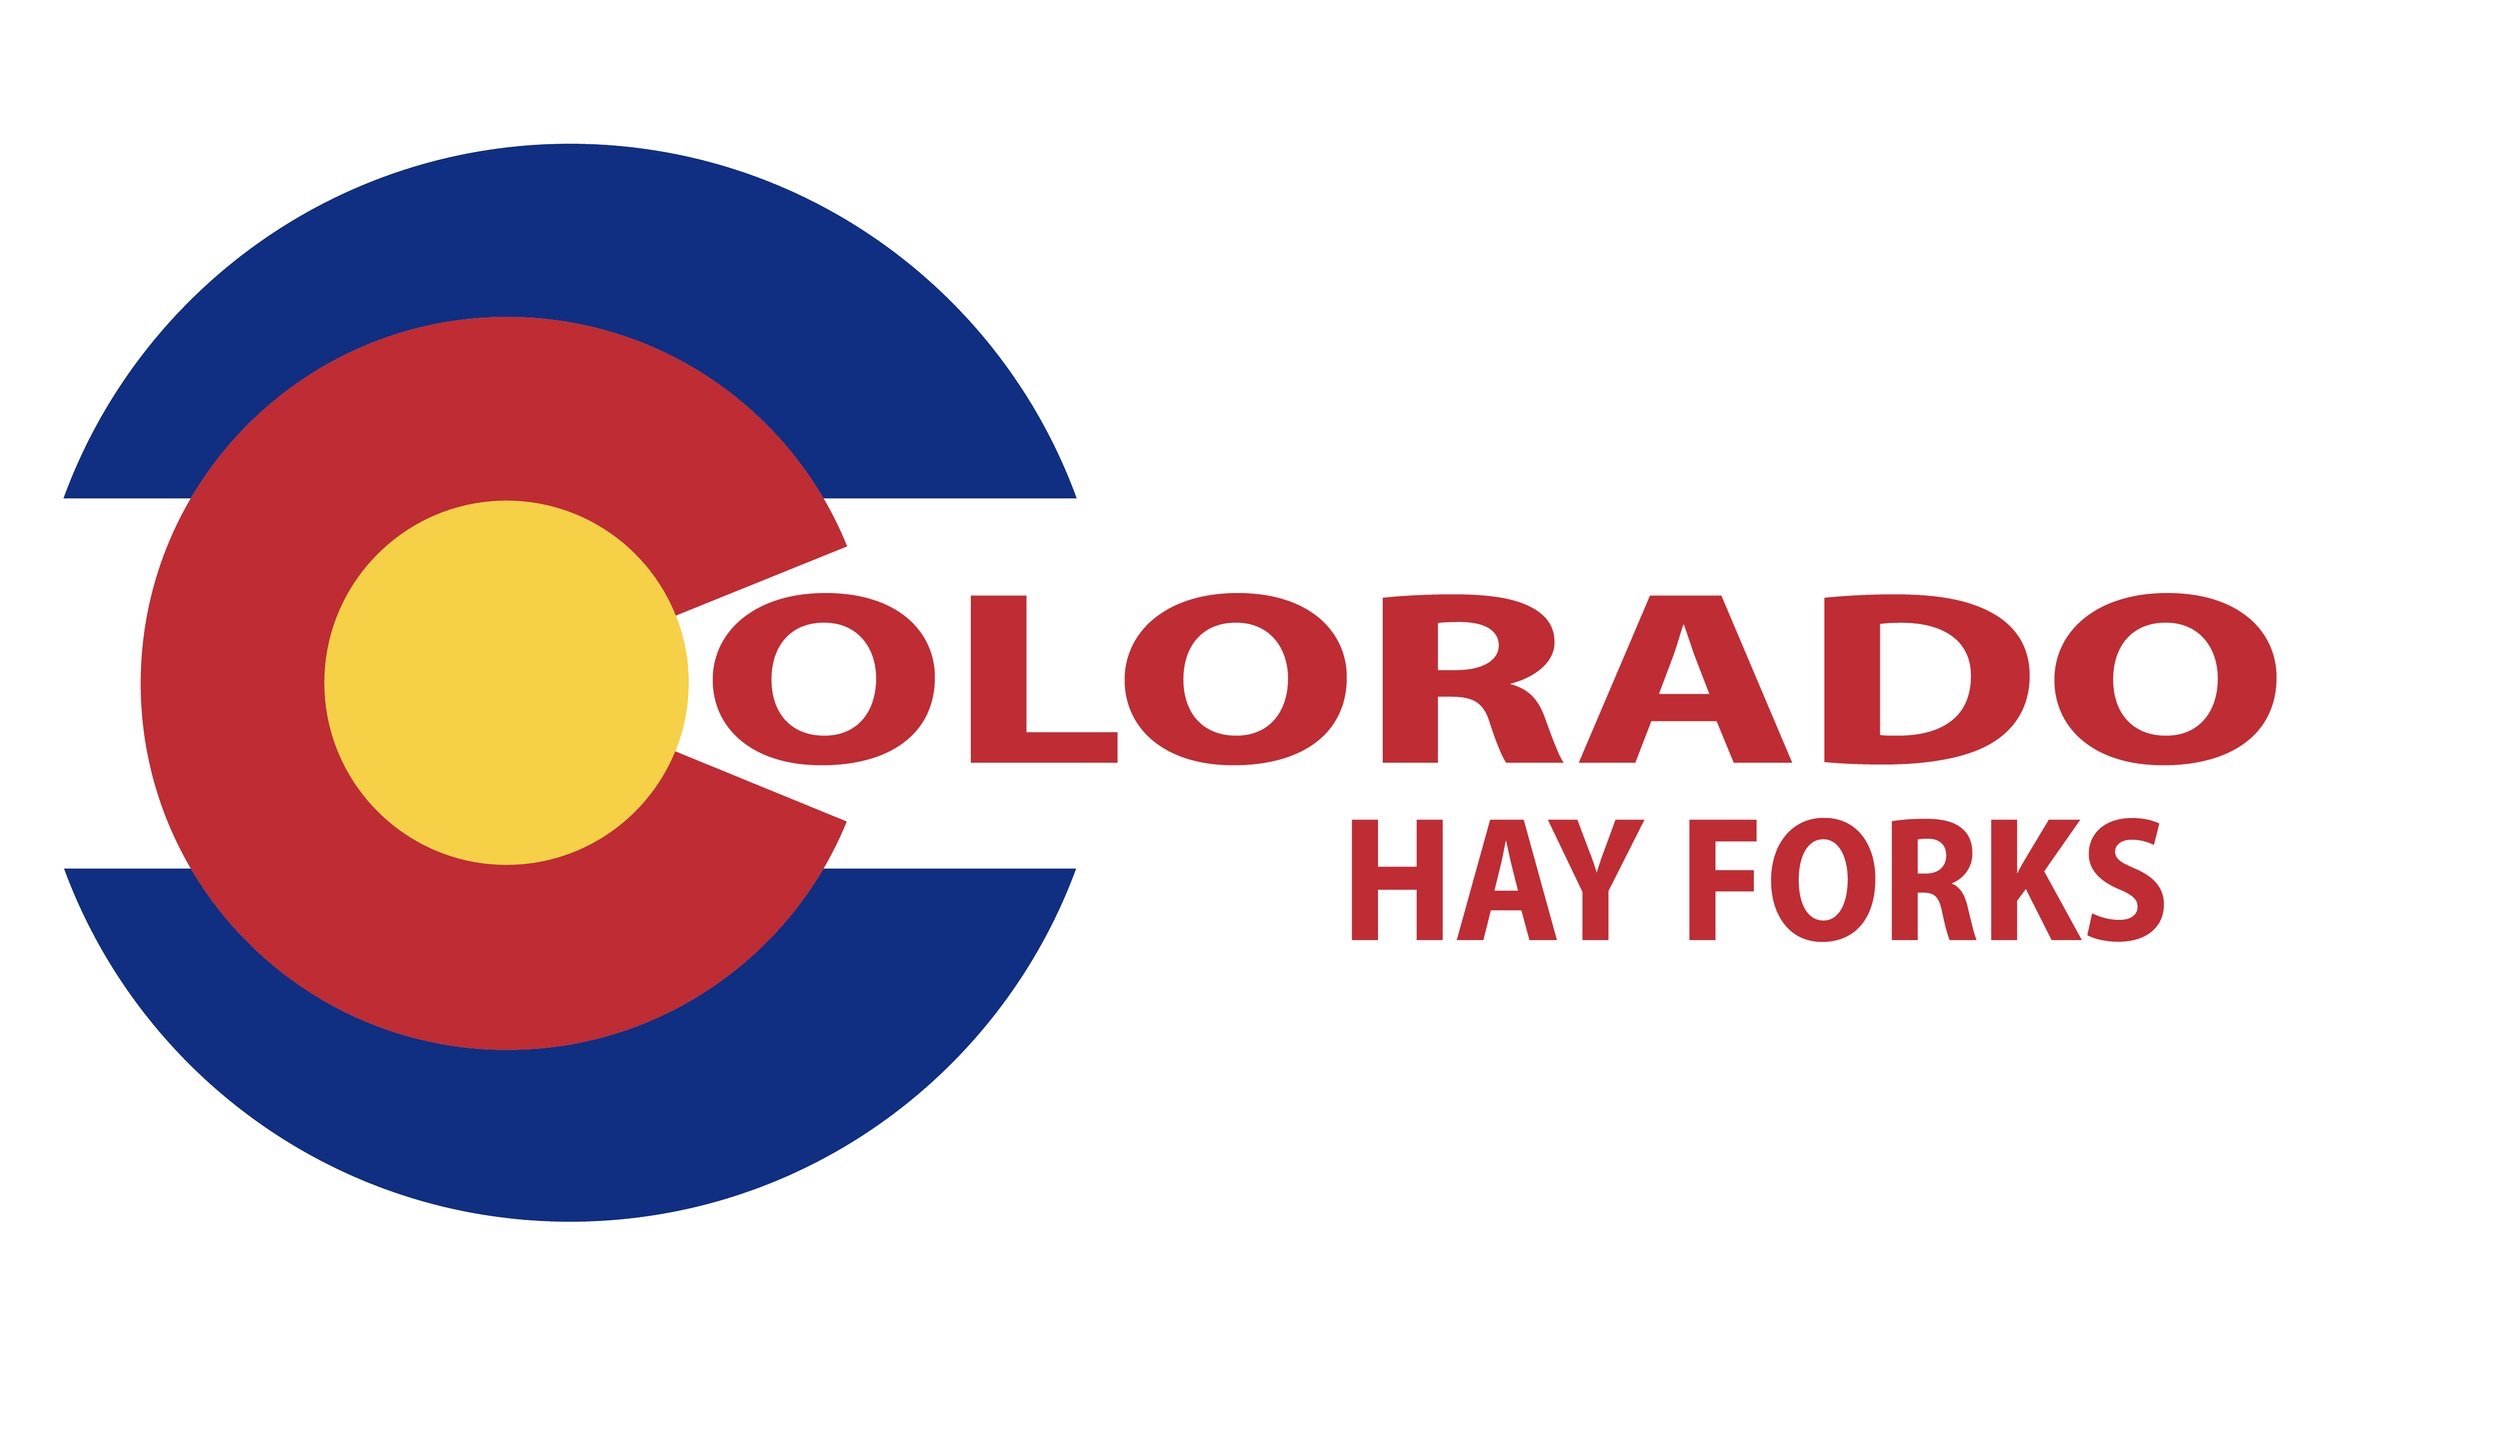 ColoradoHayFork_edited-2.jpg